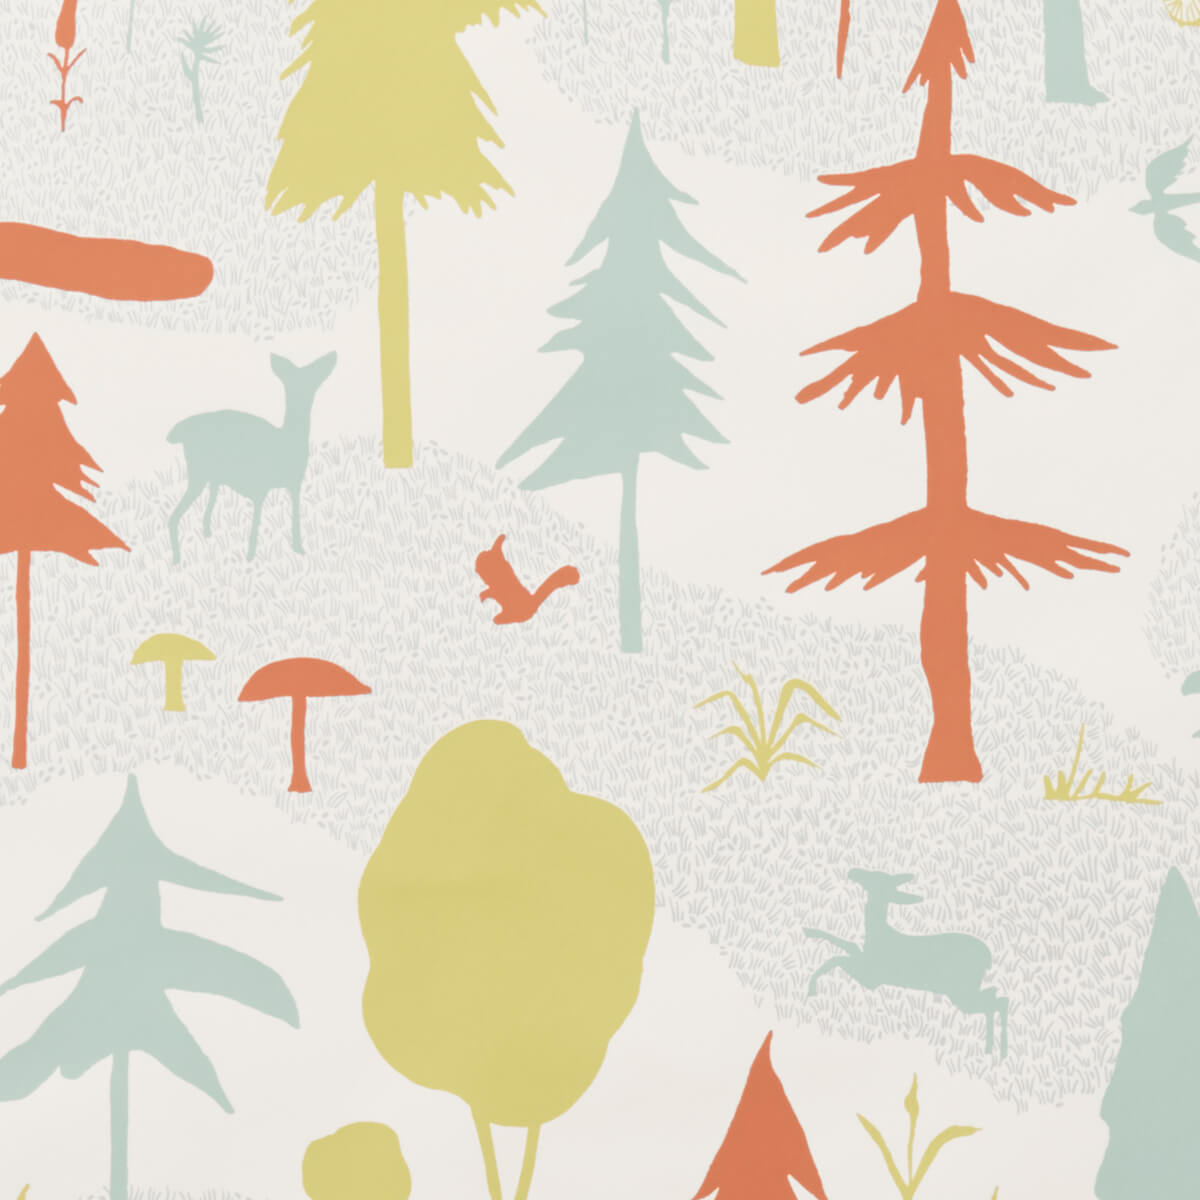 MAKELIKE Wilderness Wallpaper - Day